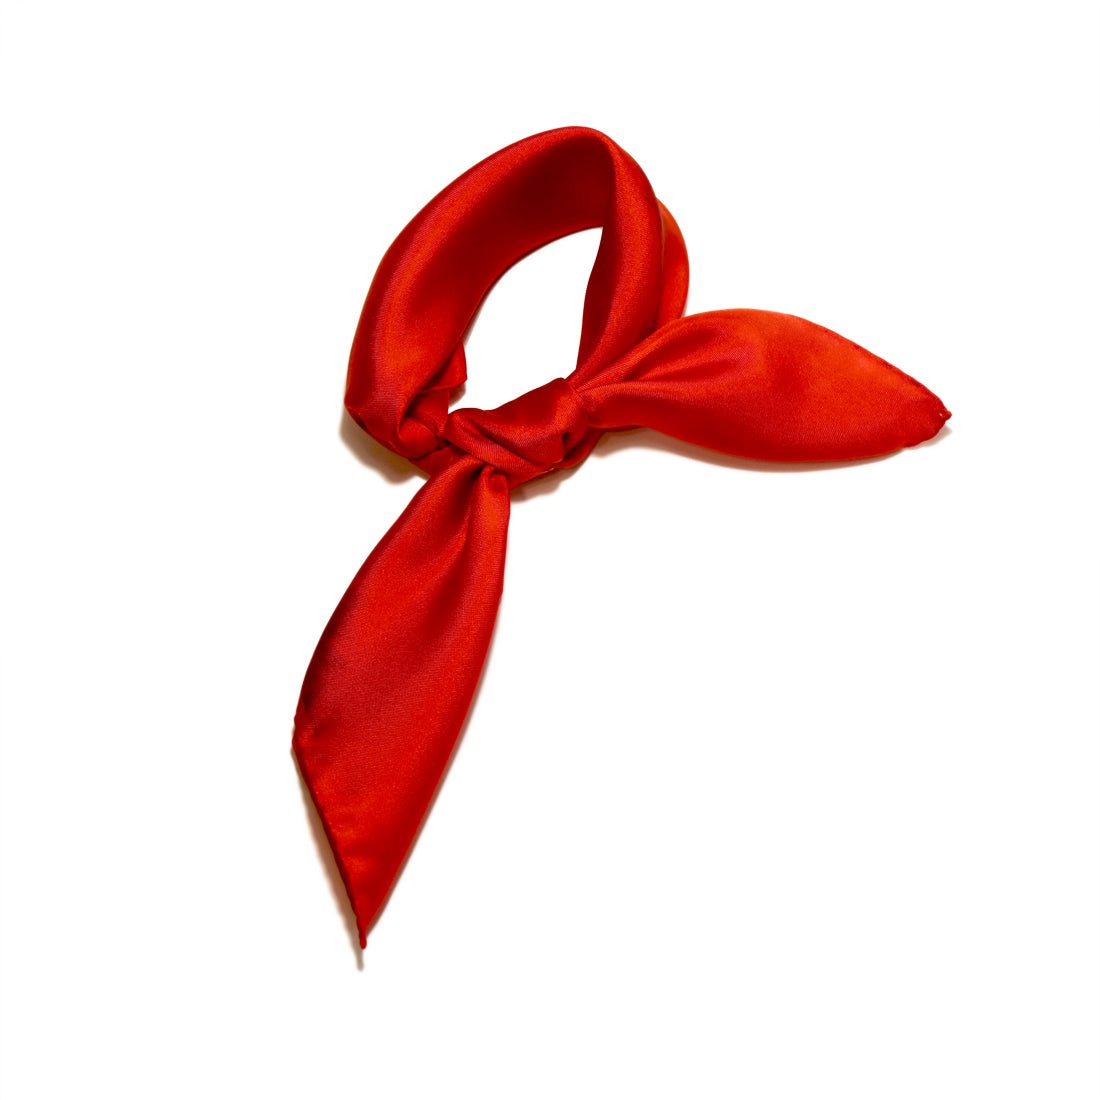 buy beautiful luxury fashion red silk scarf online paris taipei tokyo スカーフ スカーフコーデ vogue elle carre de soie foulard